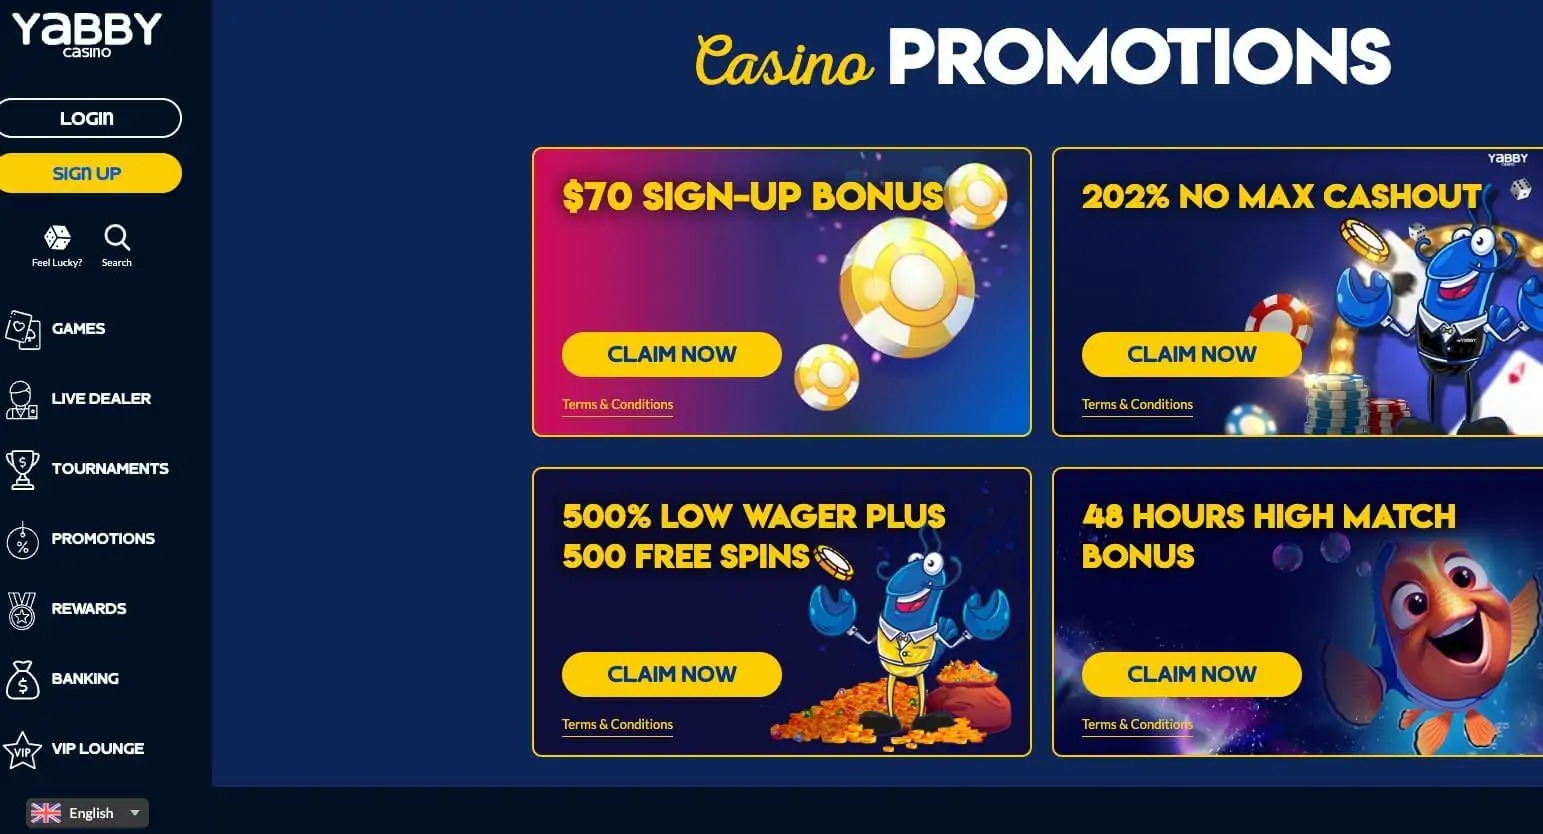 Yabby casino promotions